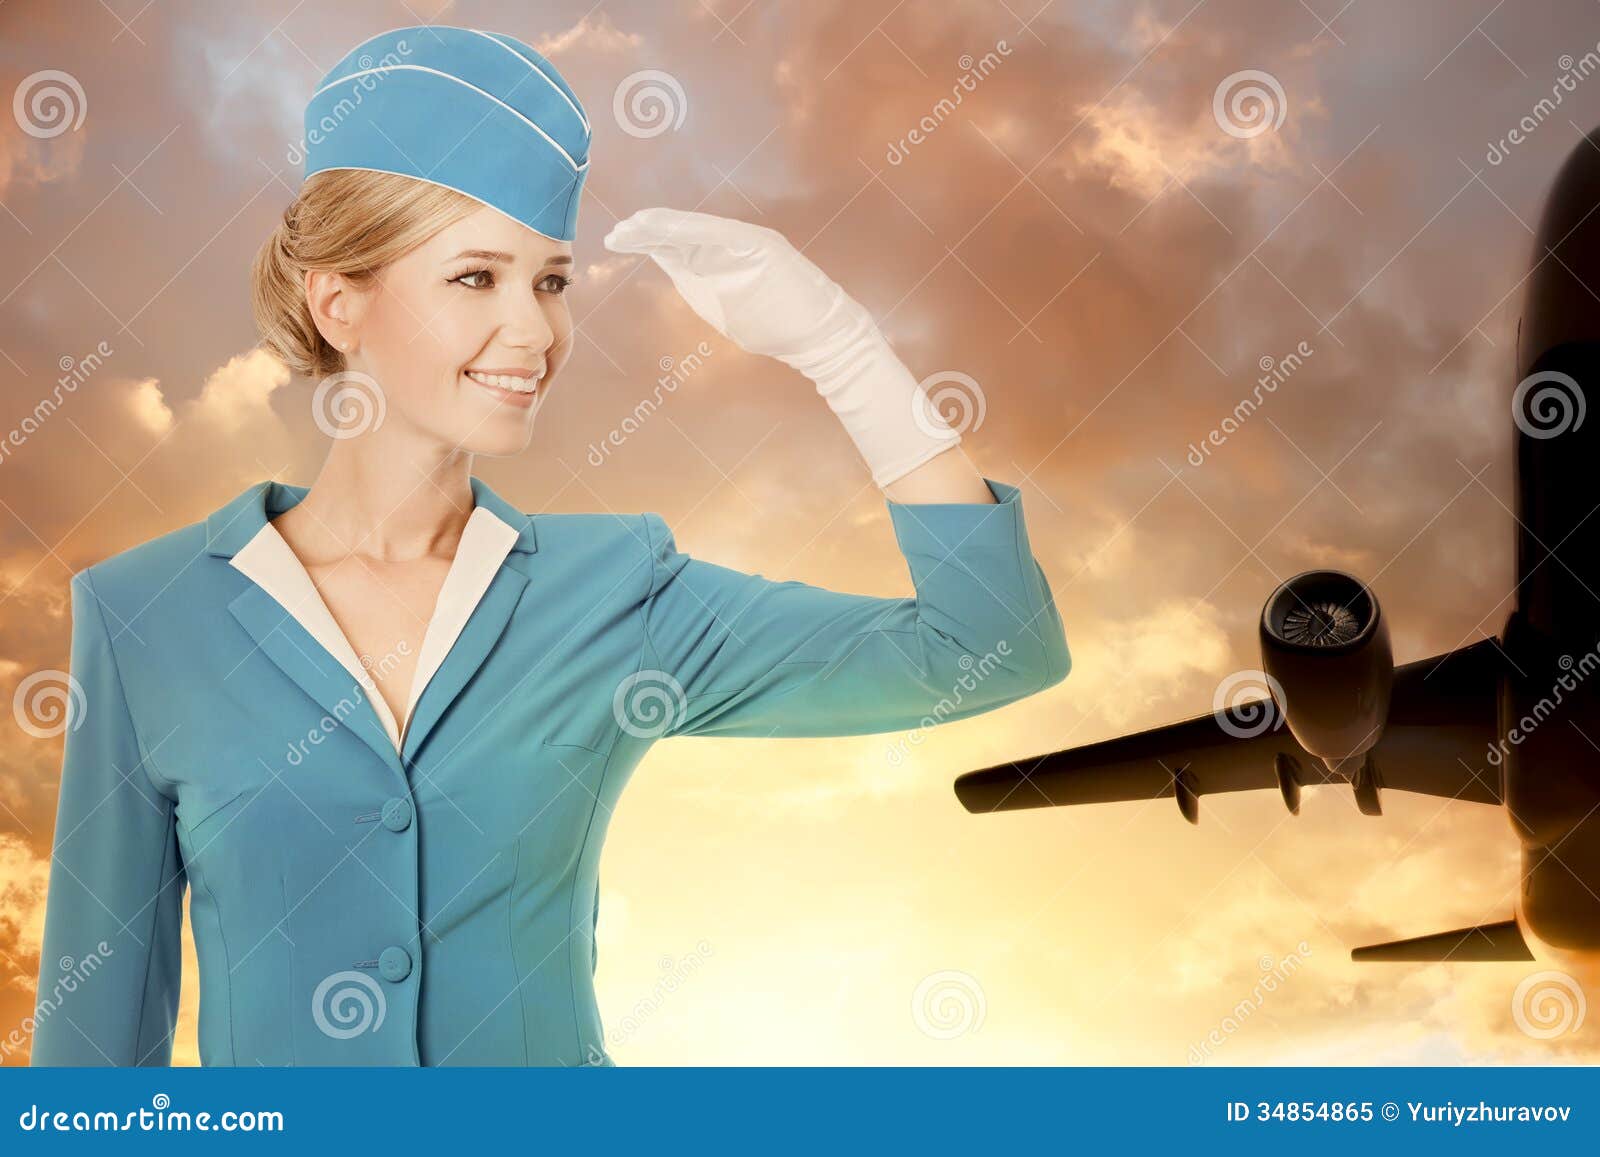 charming stewardess dressed in blue uniform on sky background